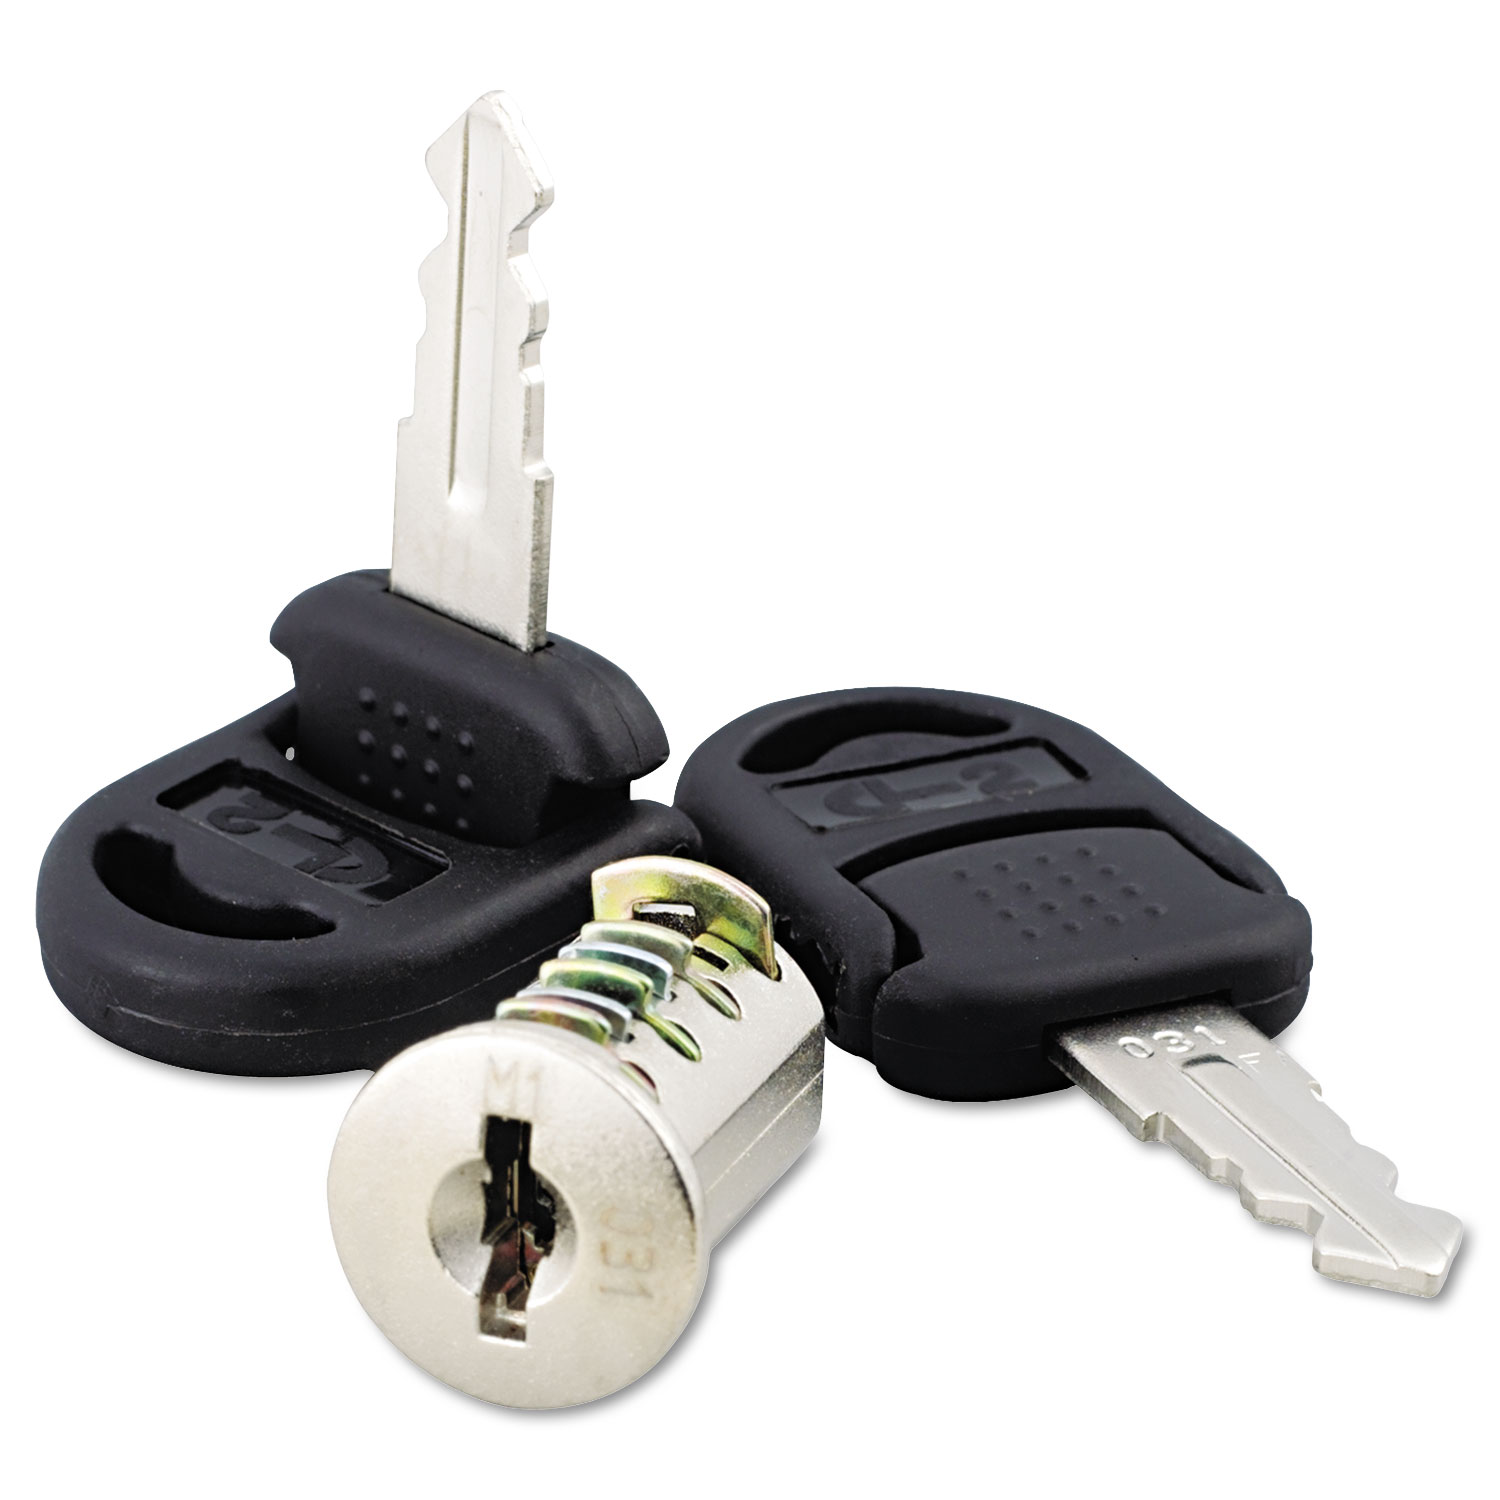  Alera ALEVA501111 Core Removable Lock and Key Set, Silver, Two Keys/Set (ALEVA501111) 